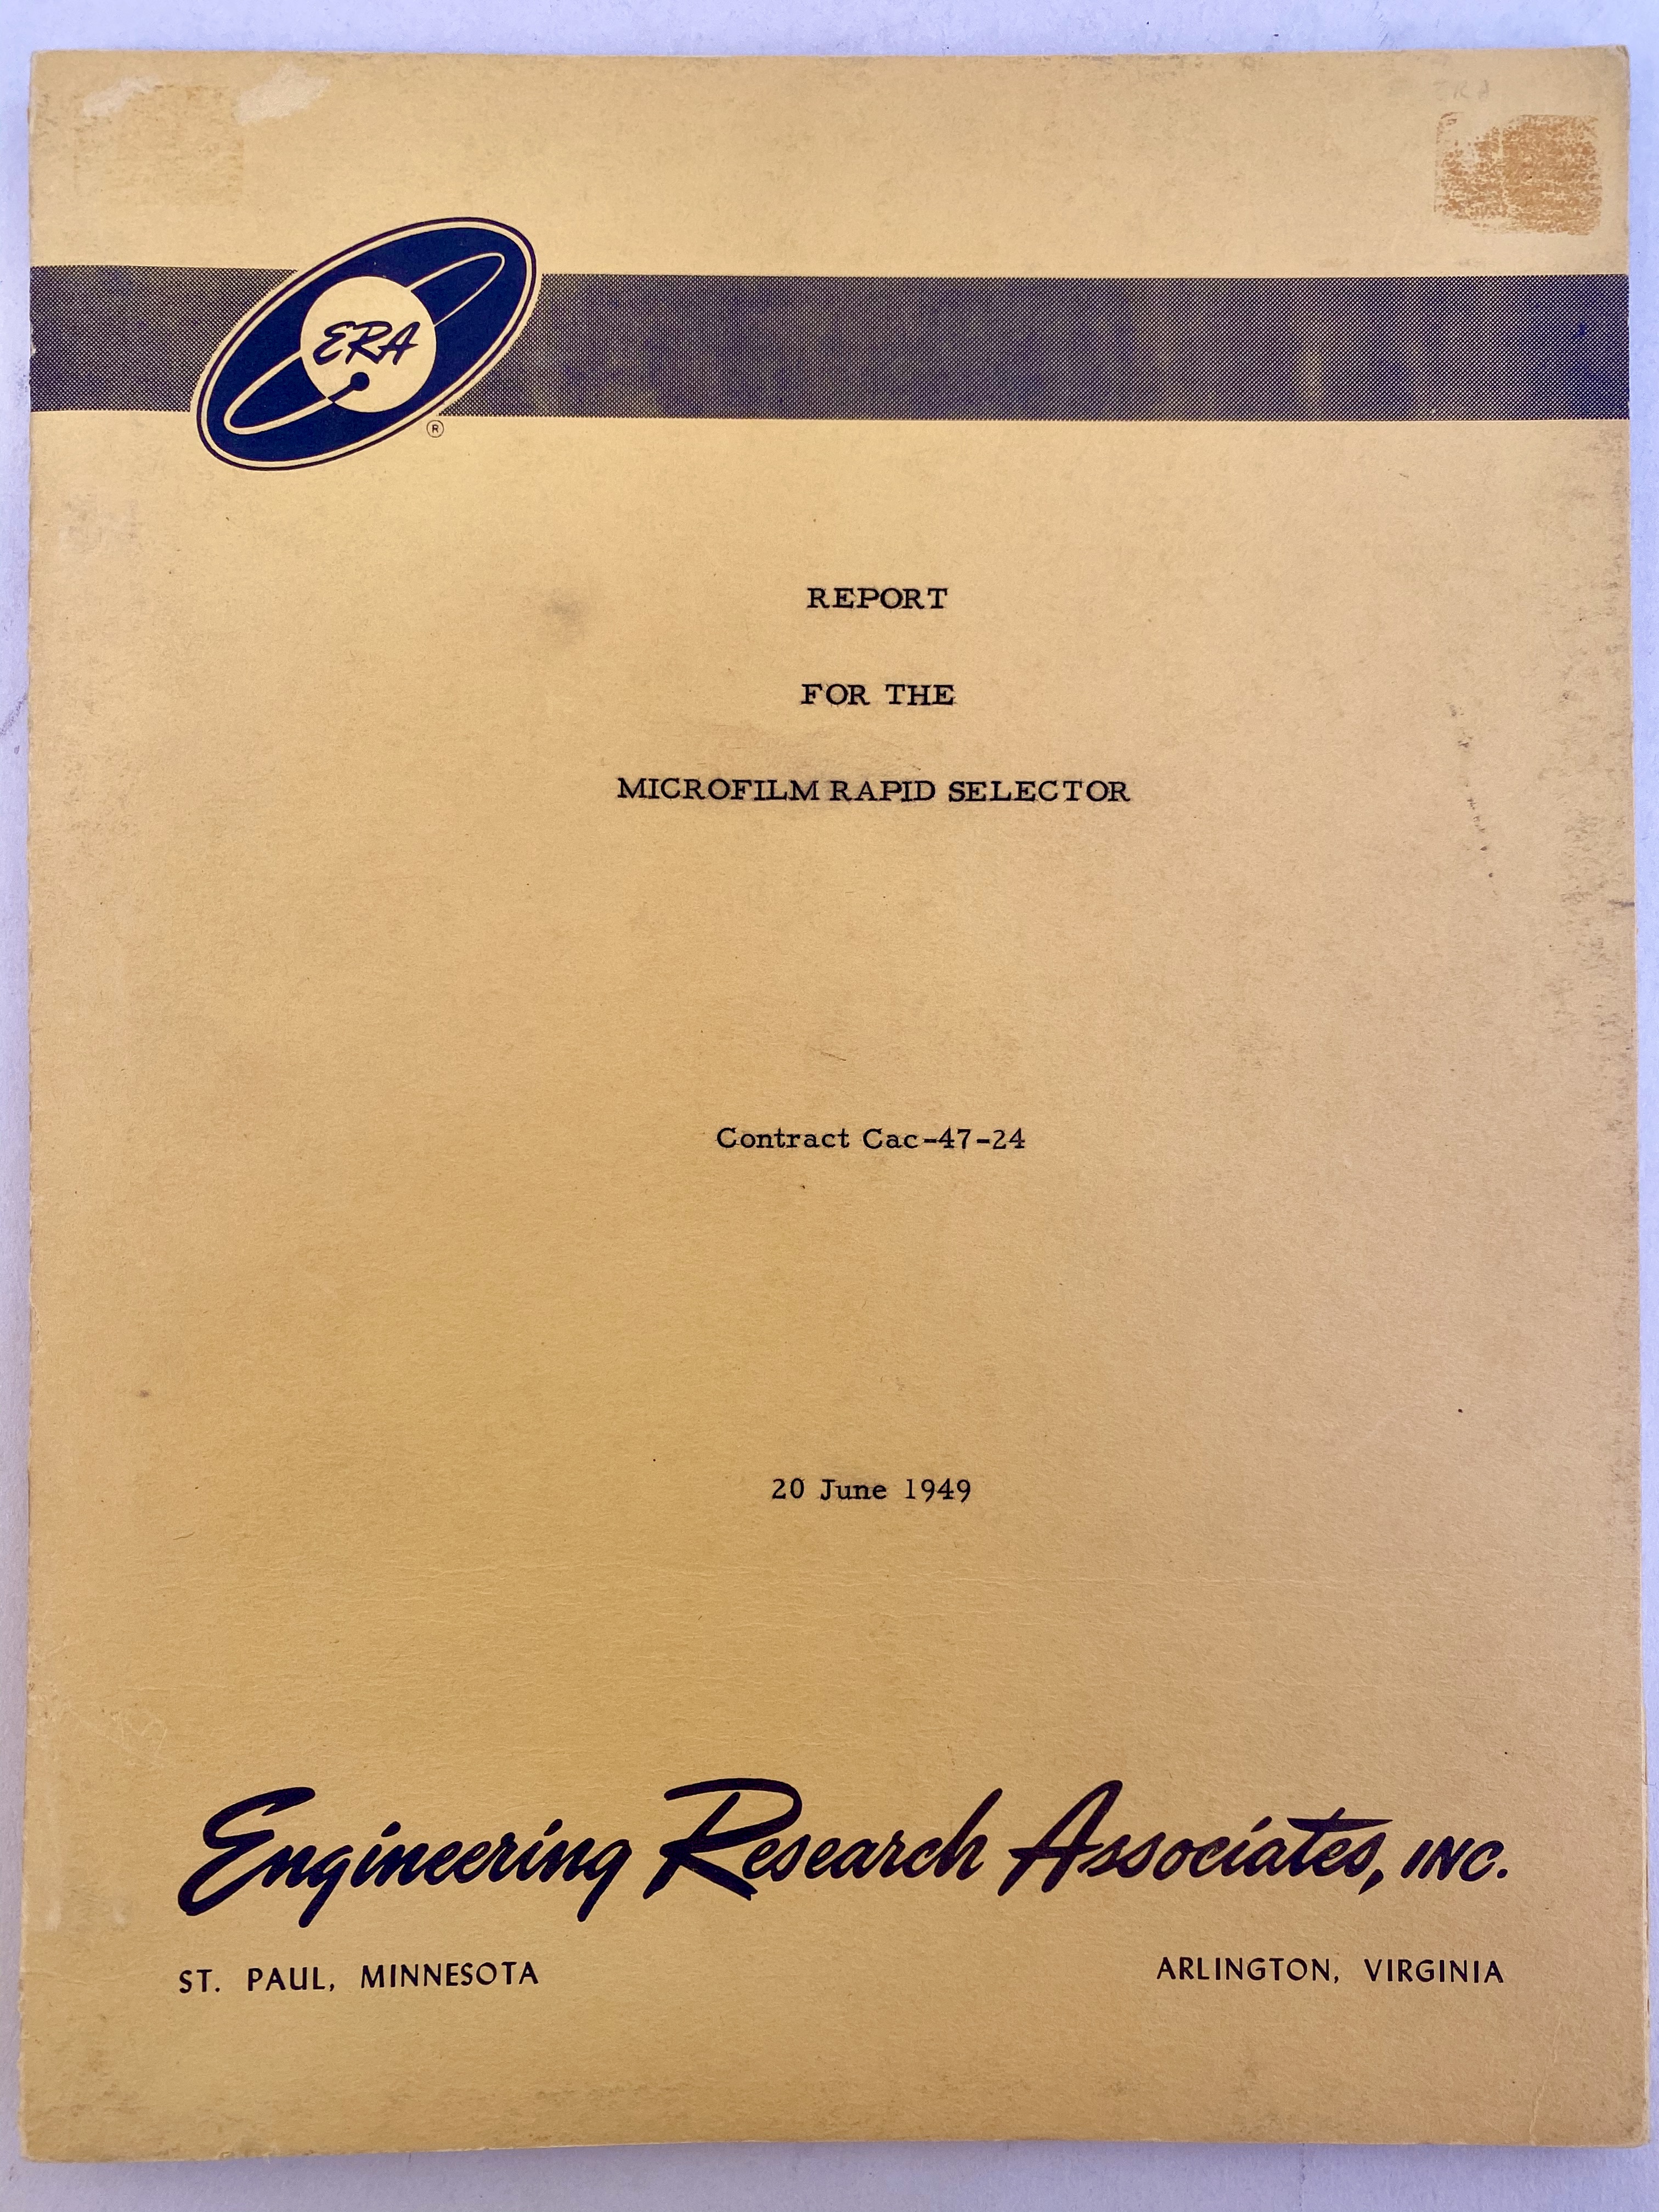 Engineering Research Associates Microfilm Rapid Selector Report